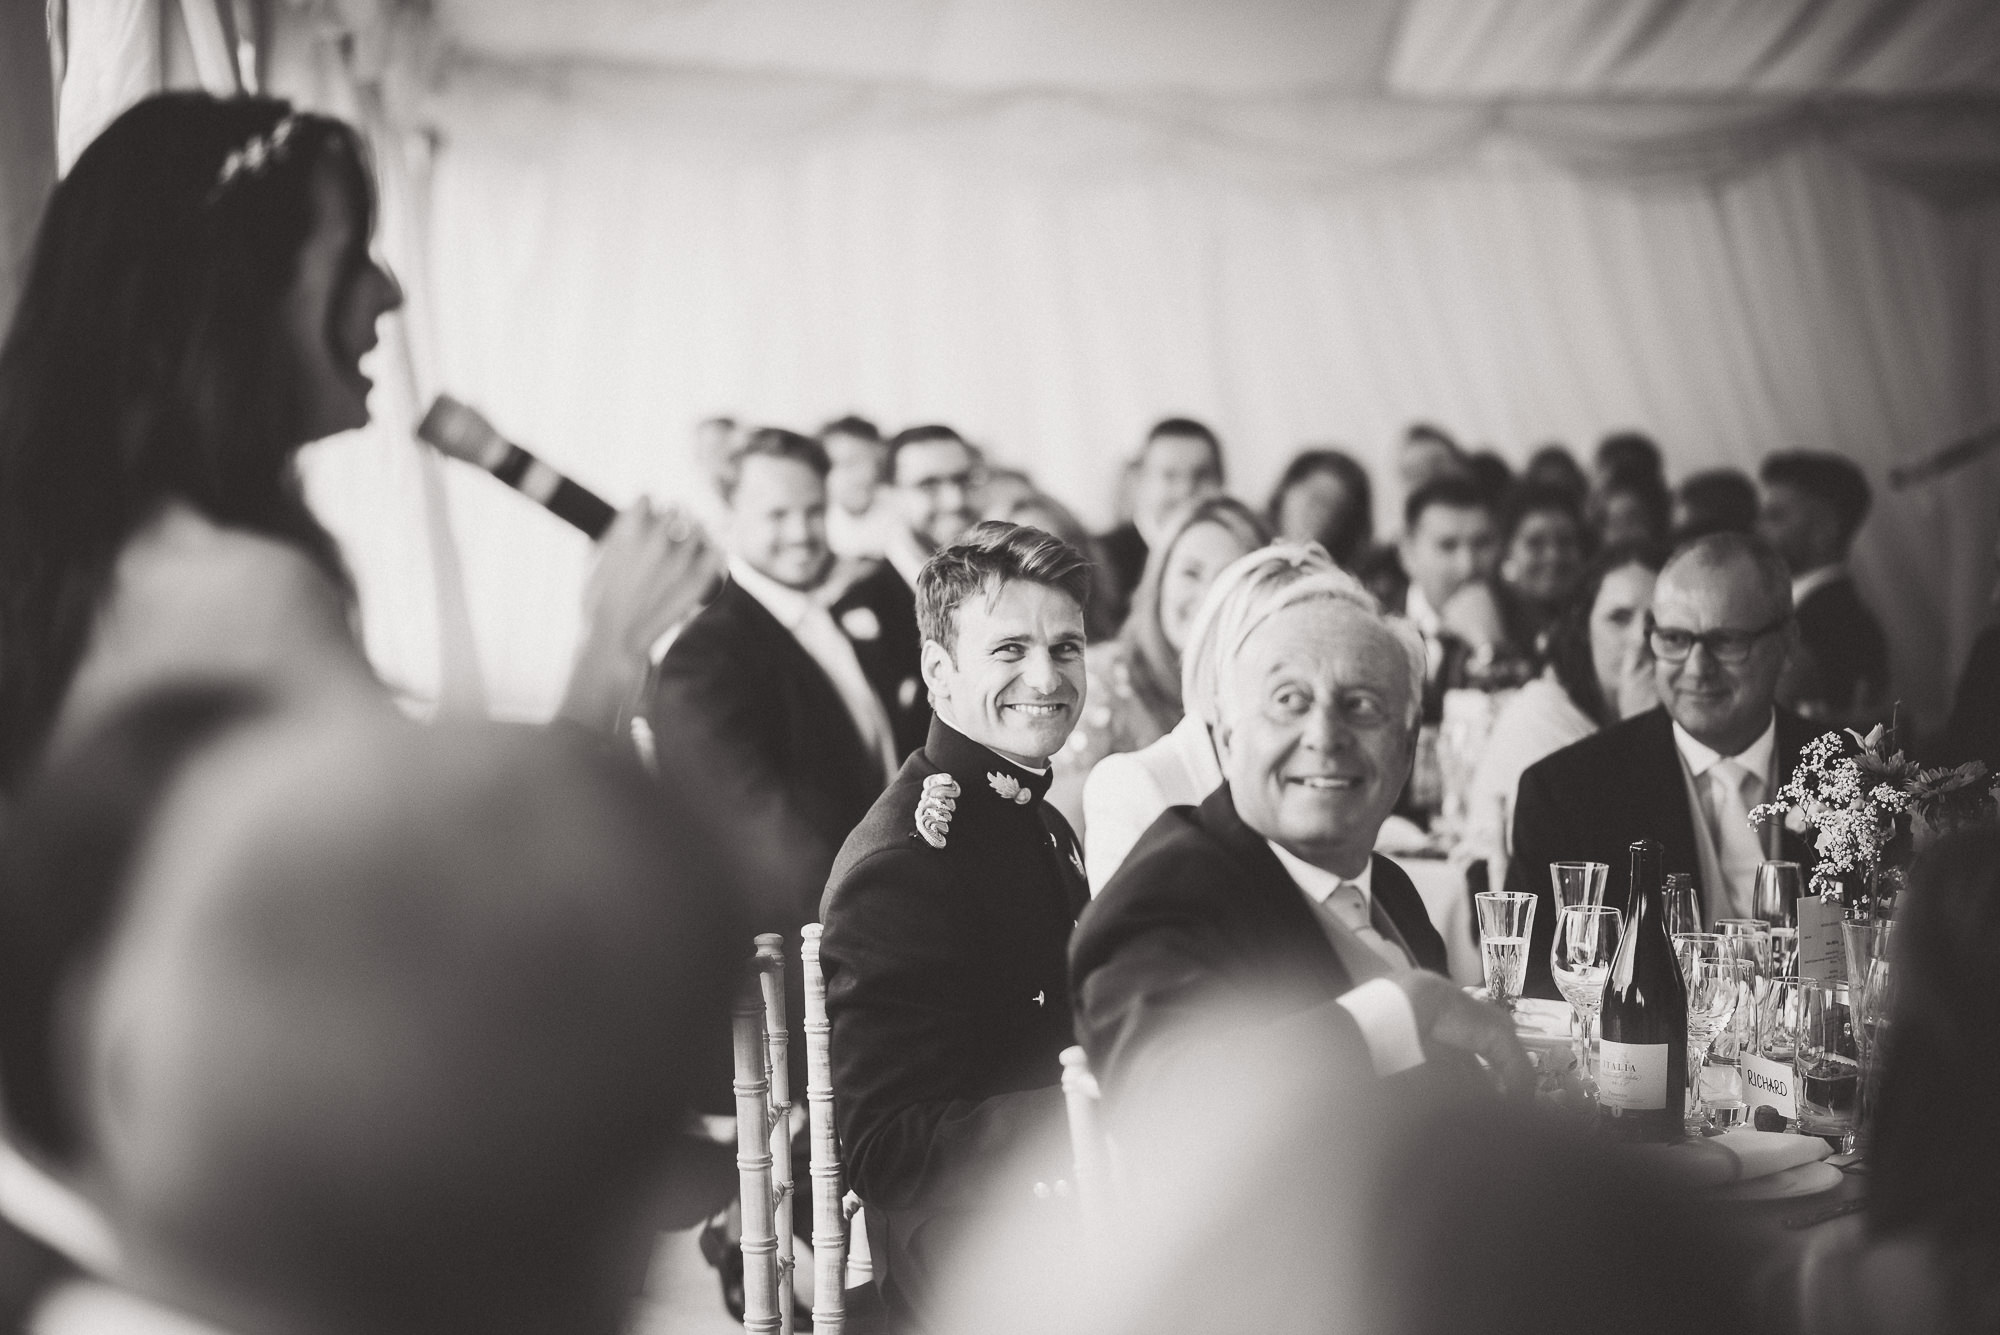 A wedding photo capturing a man delivering a speech.